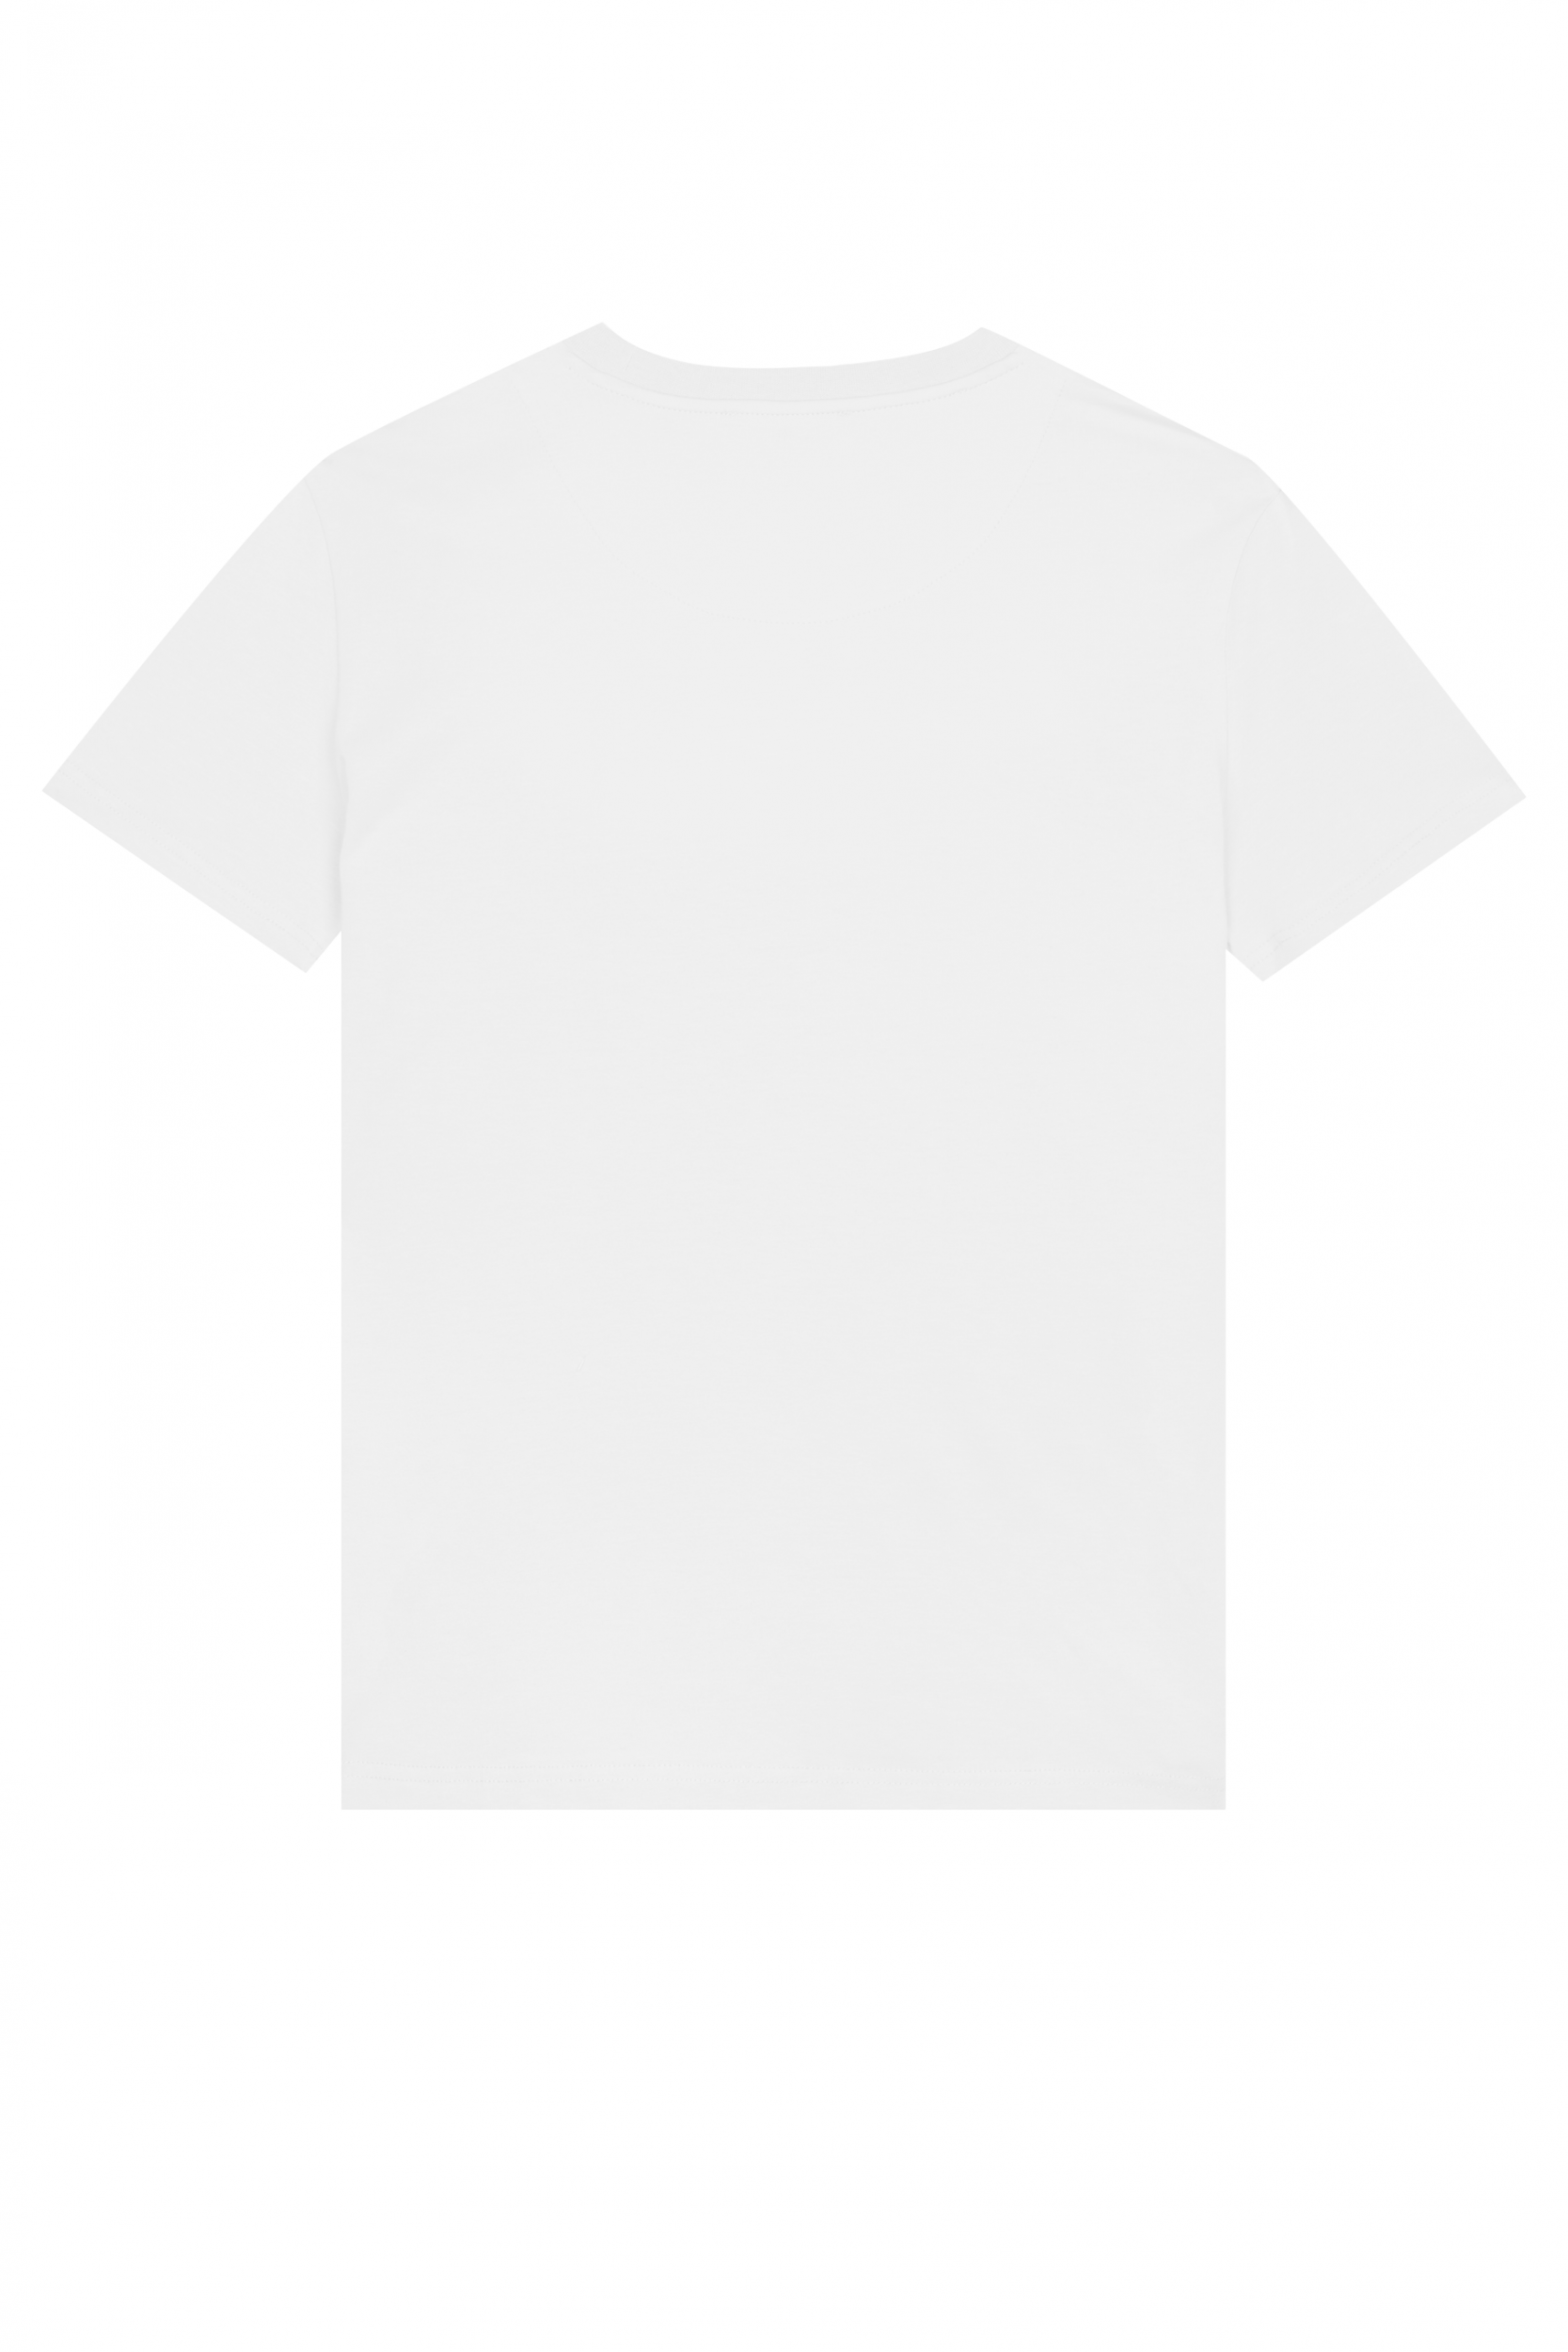 Basic Capsule White Tshirt | WHITE